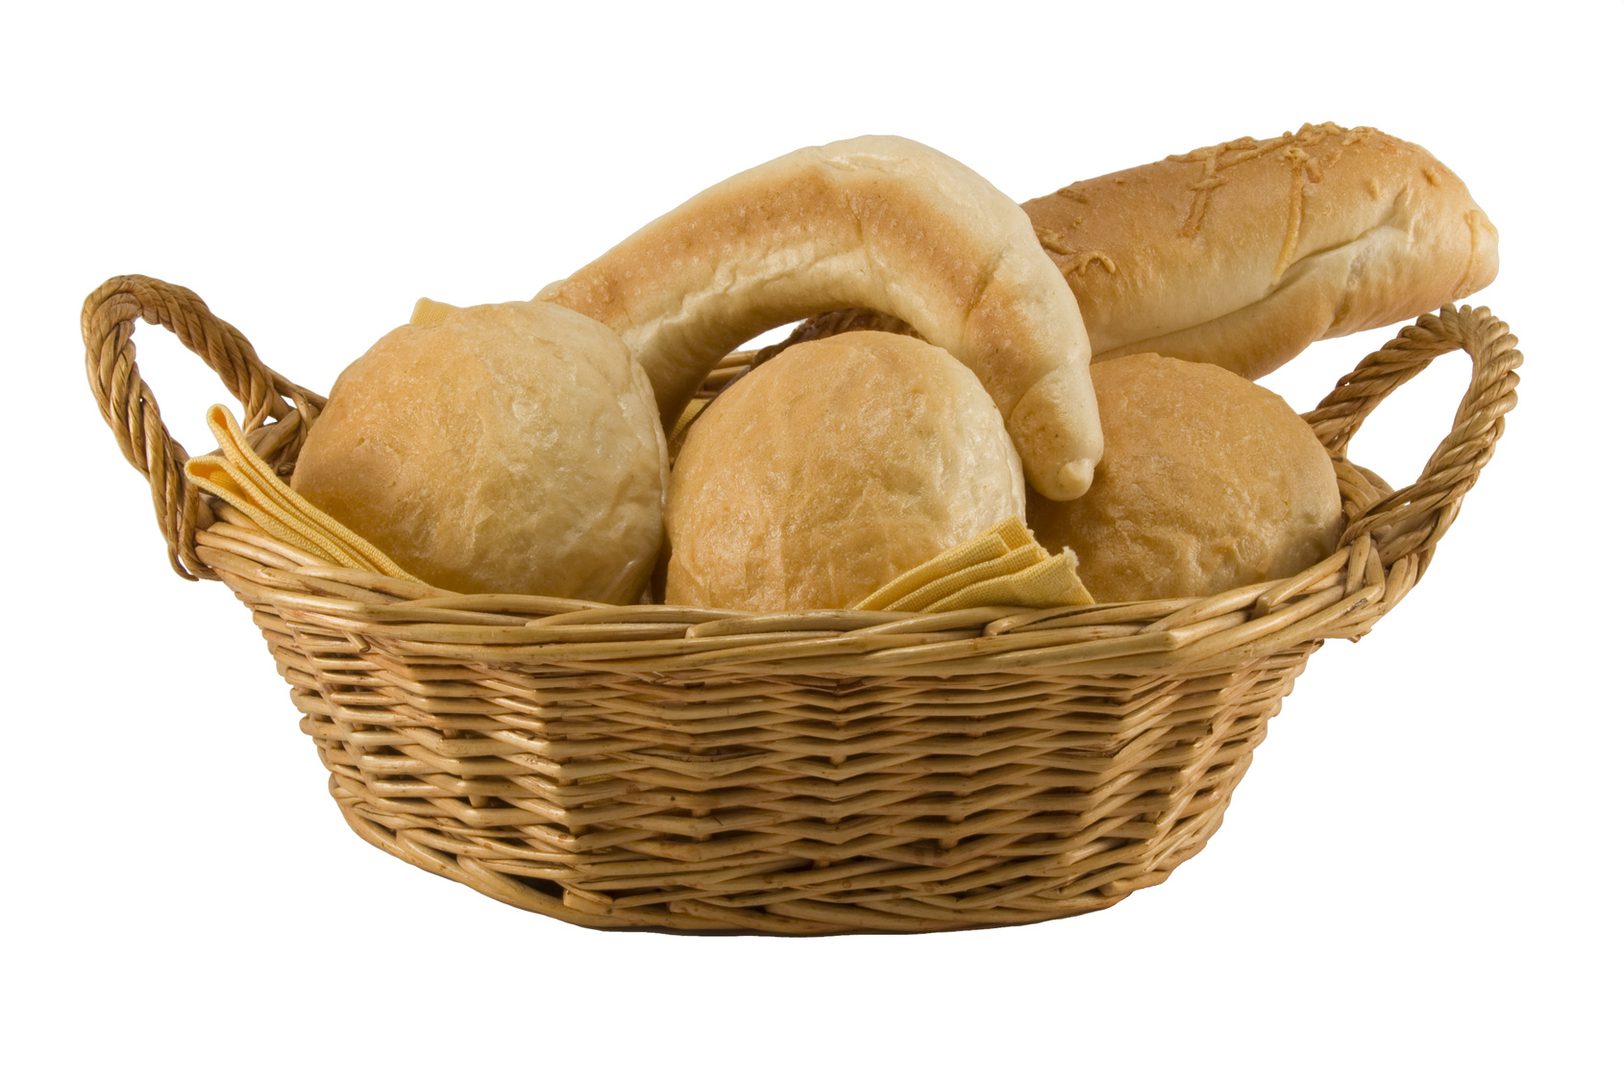 Basket of rolls